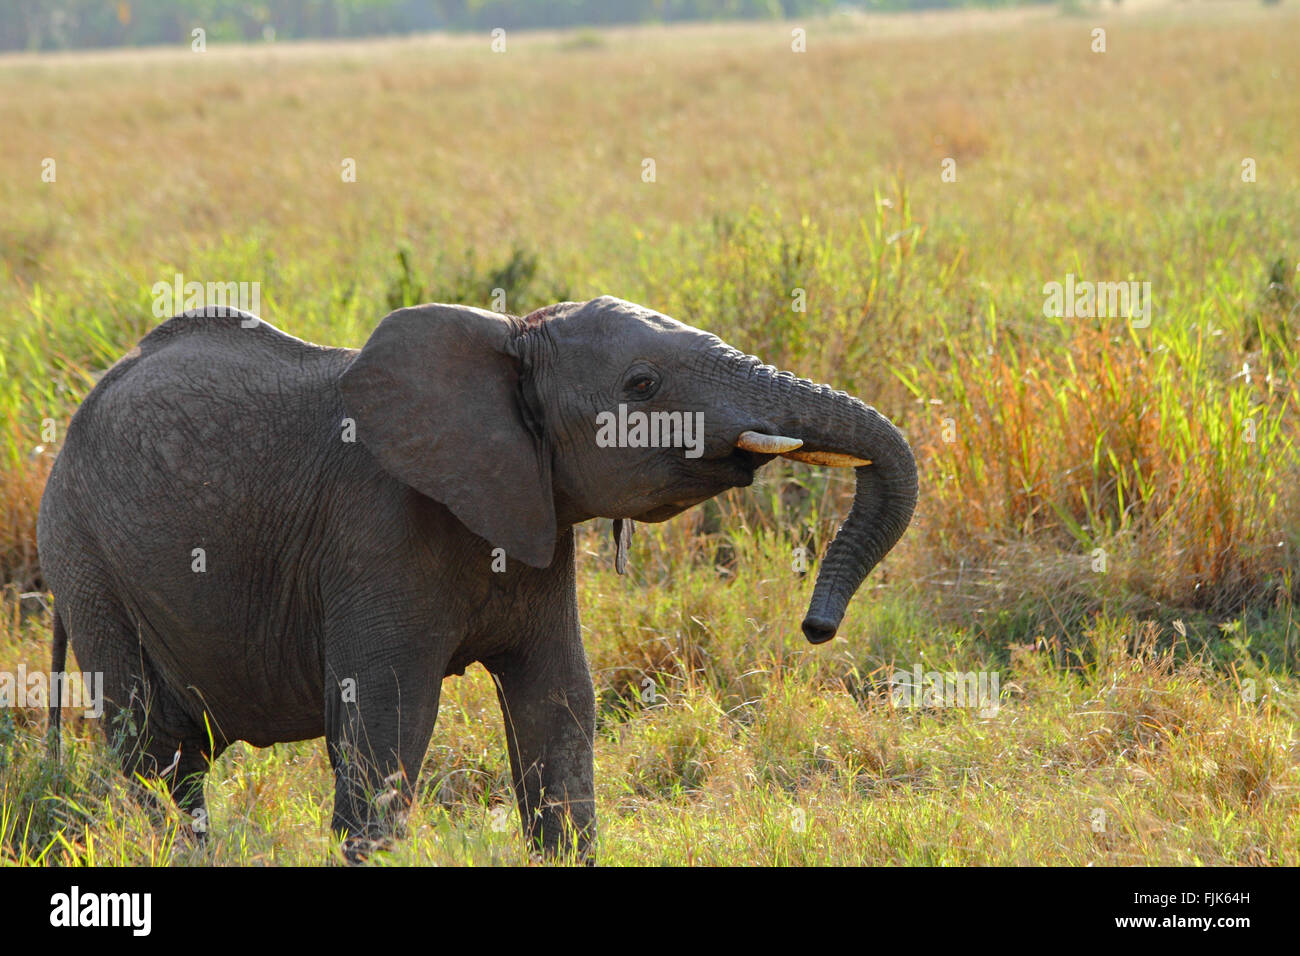 A juvenile elephant shows visible displays of rebellious behaviour. Stock Photo